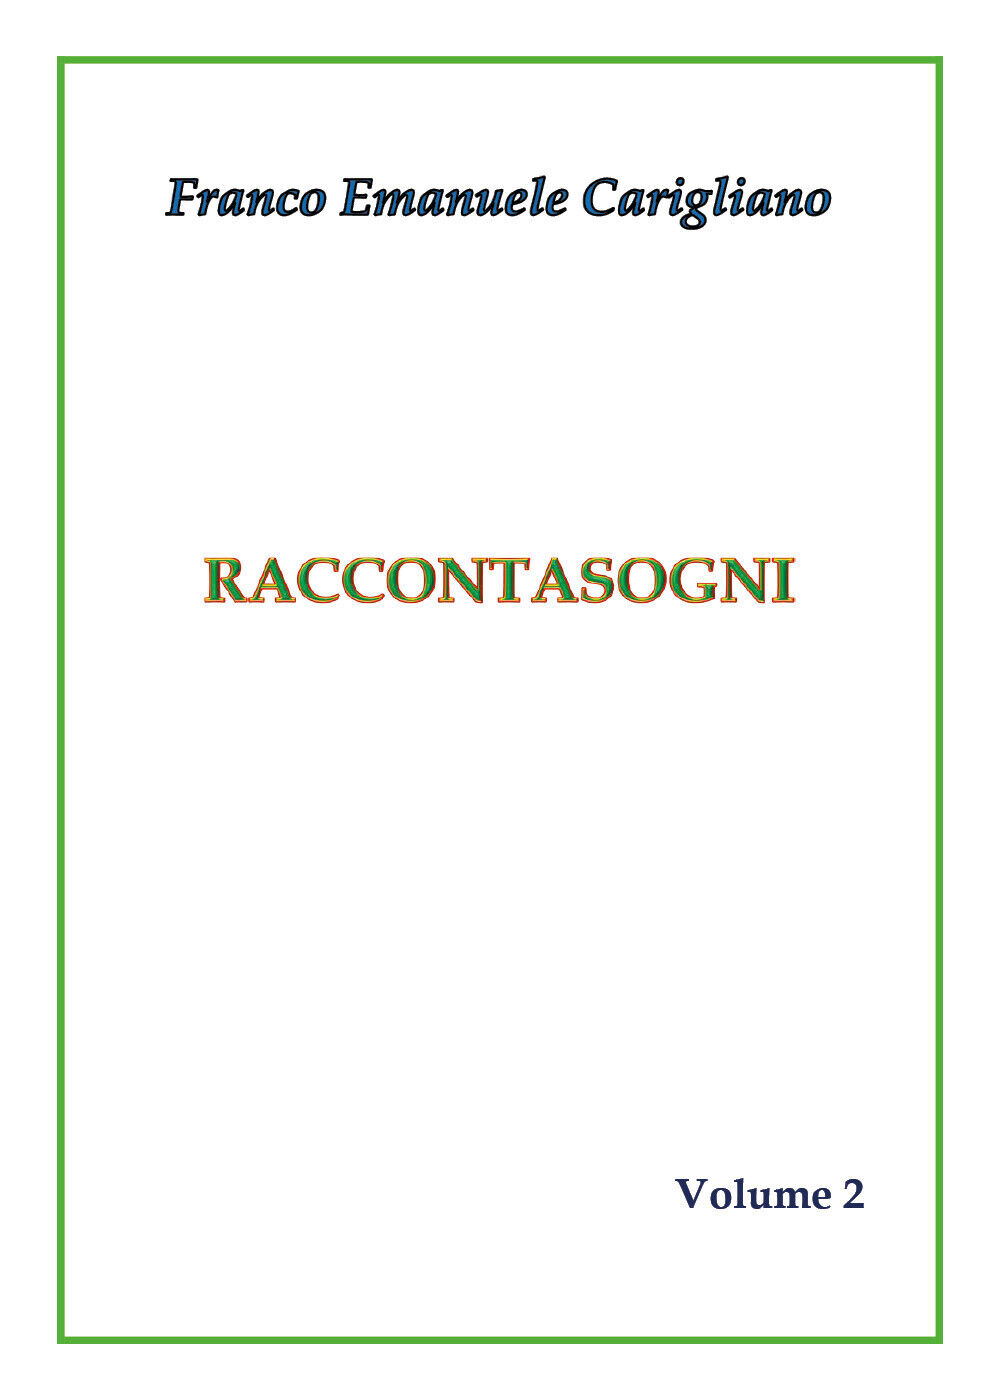  RACCONTASOGNI Volume 2  di Franco Emanuele Carigliano,  2018,  Youcanprint